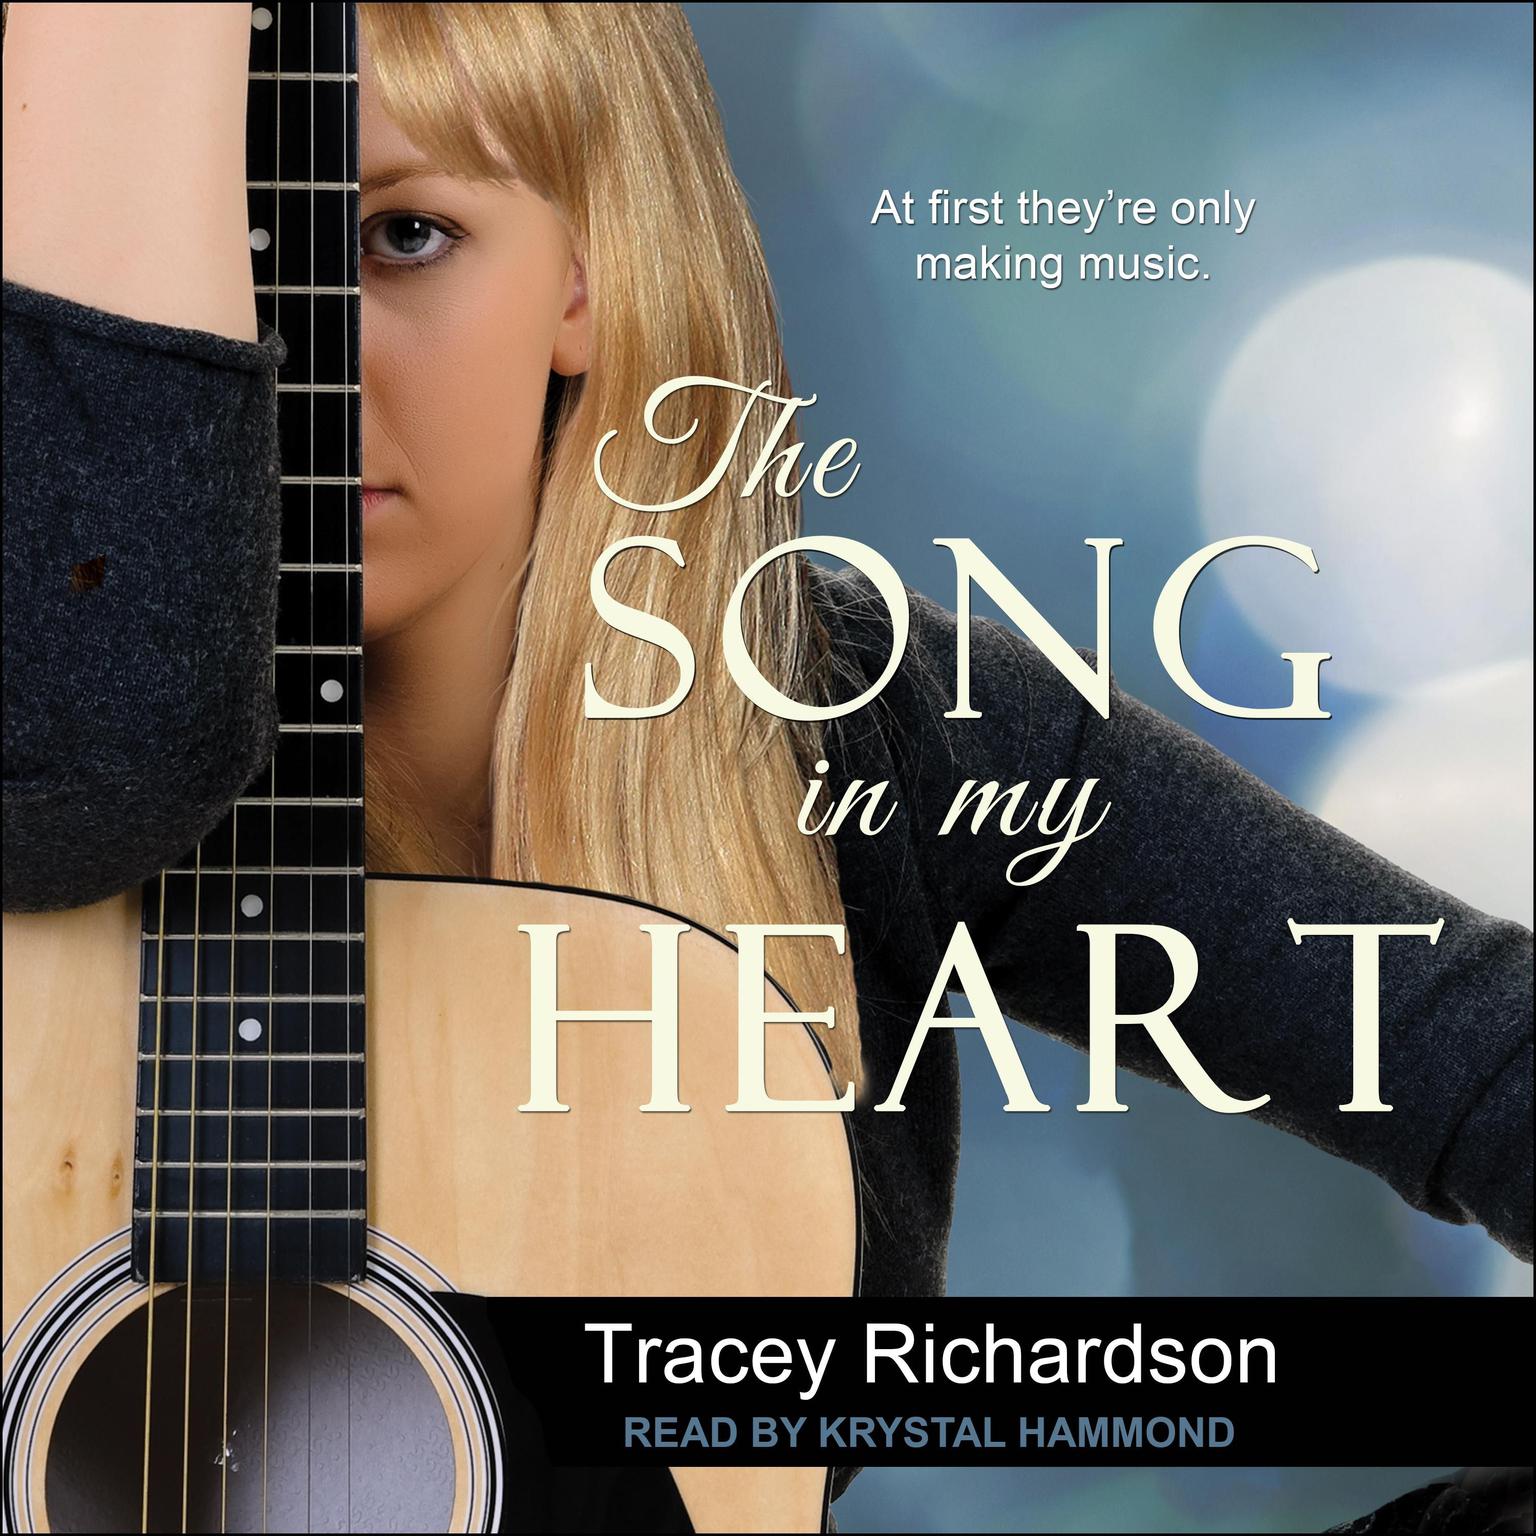 Tracey Richardson, Krystal Hammond: The Song in My Heart (AudiobookFormat, 2015, Tantor Audio)